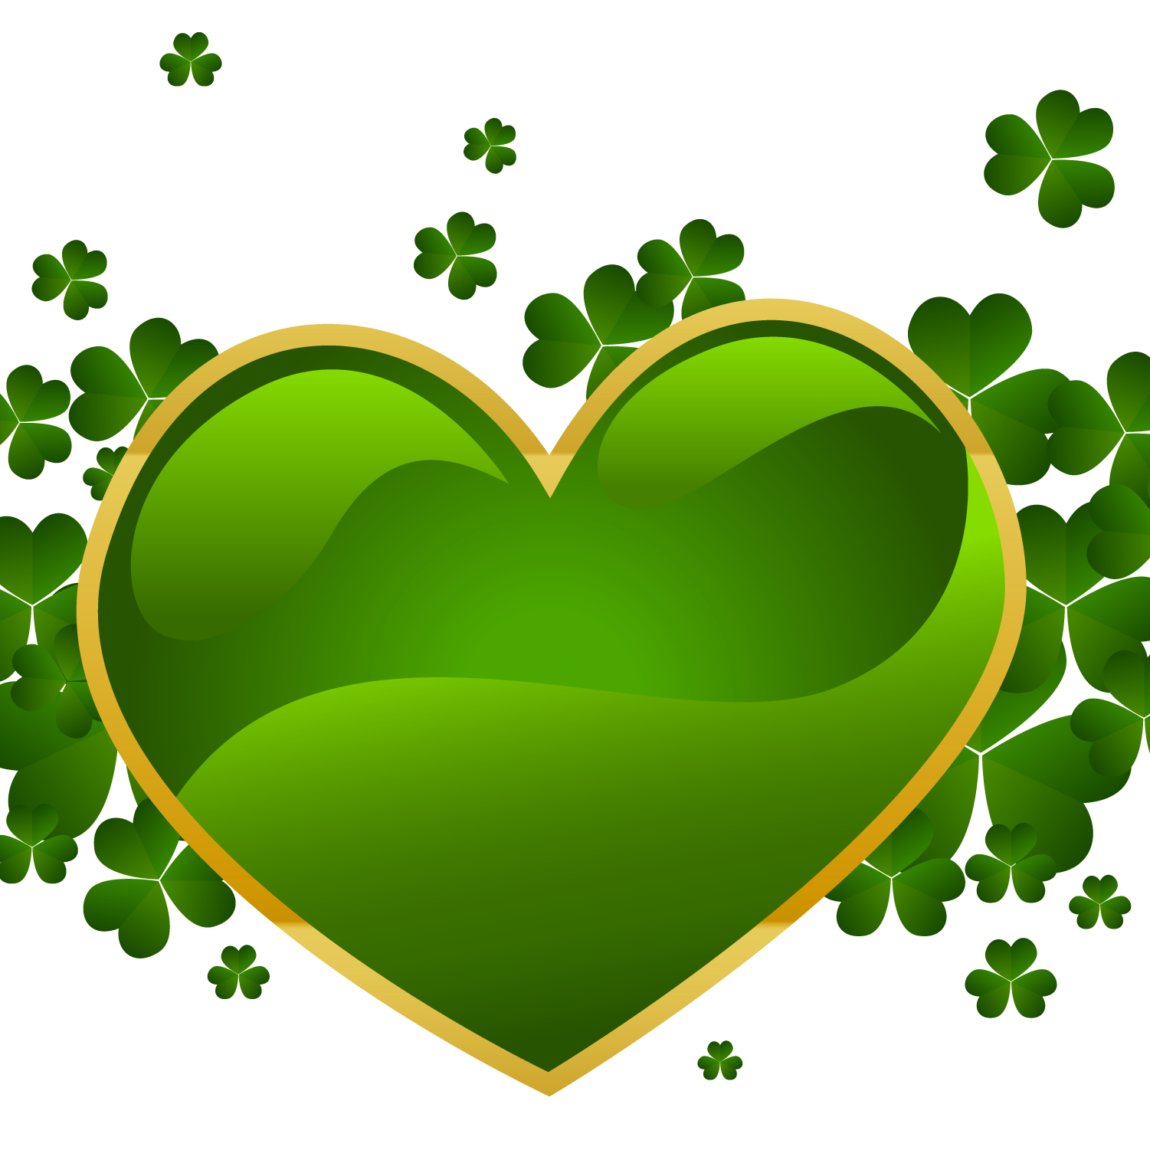 Saint Patrick's Day Shamrock Happy St. Patrick's Day Clip art Image ...